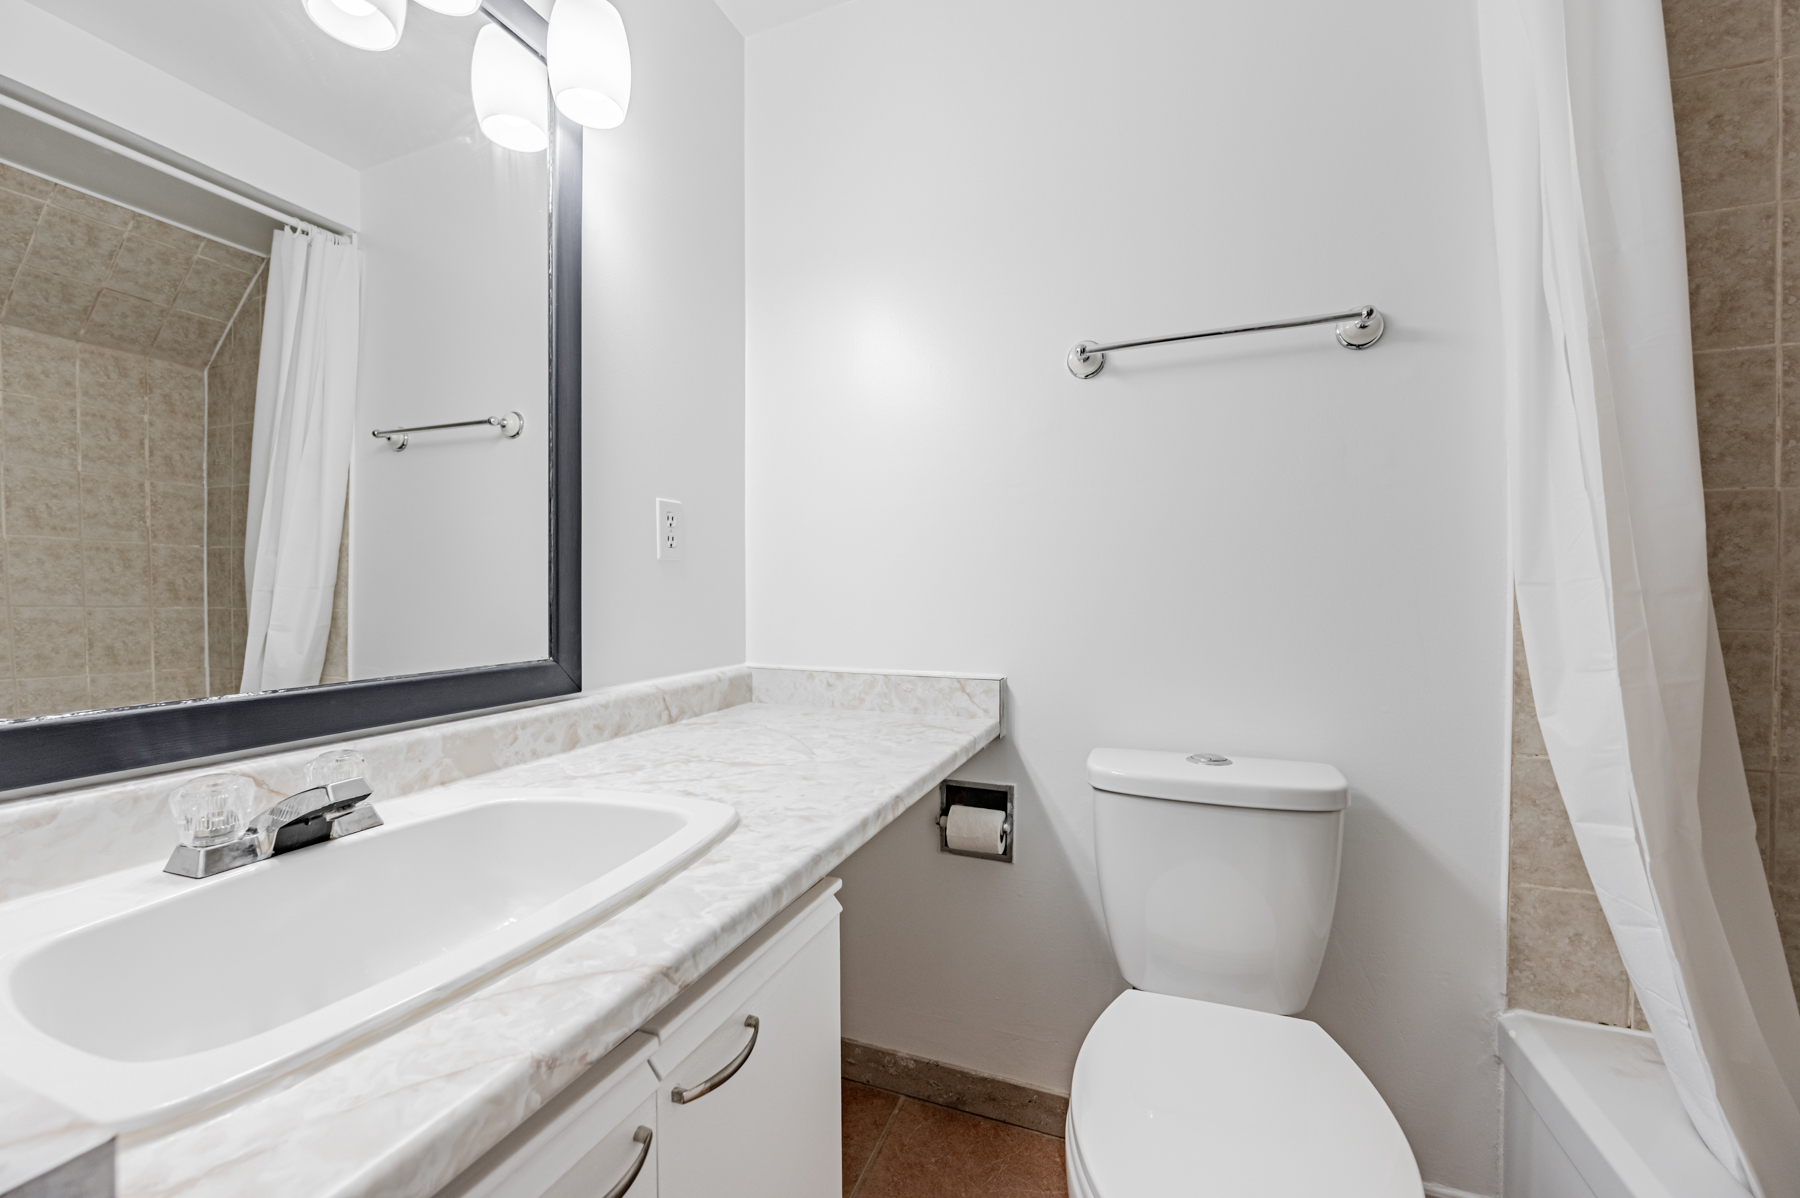 2133 Dufferin St – Main Floor Rental Unit B – bathroom with gray walls and ceramic tiles.